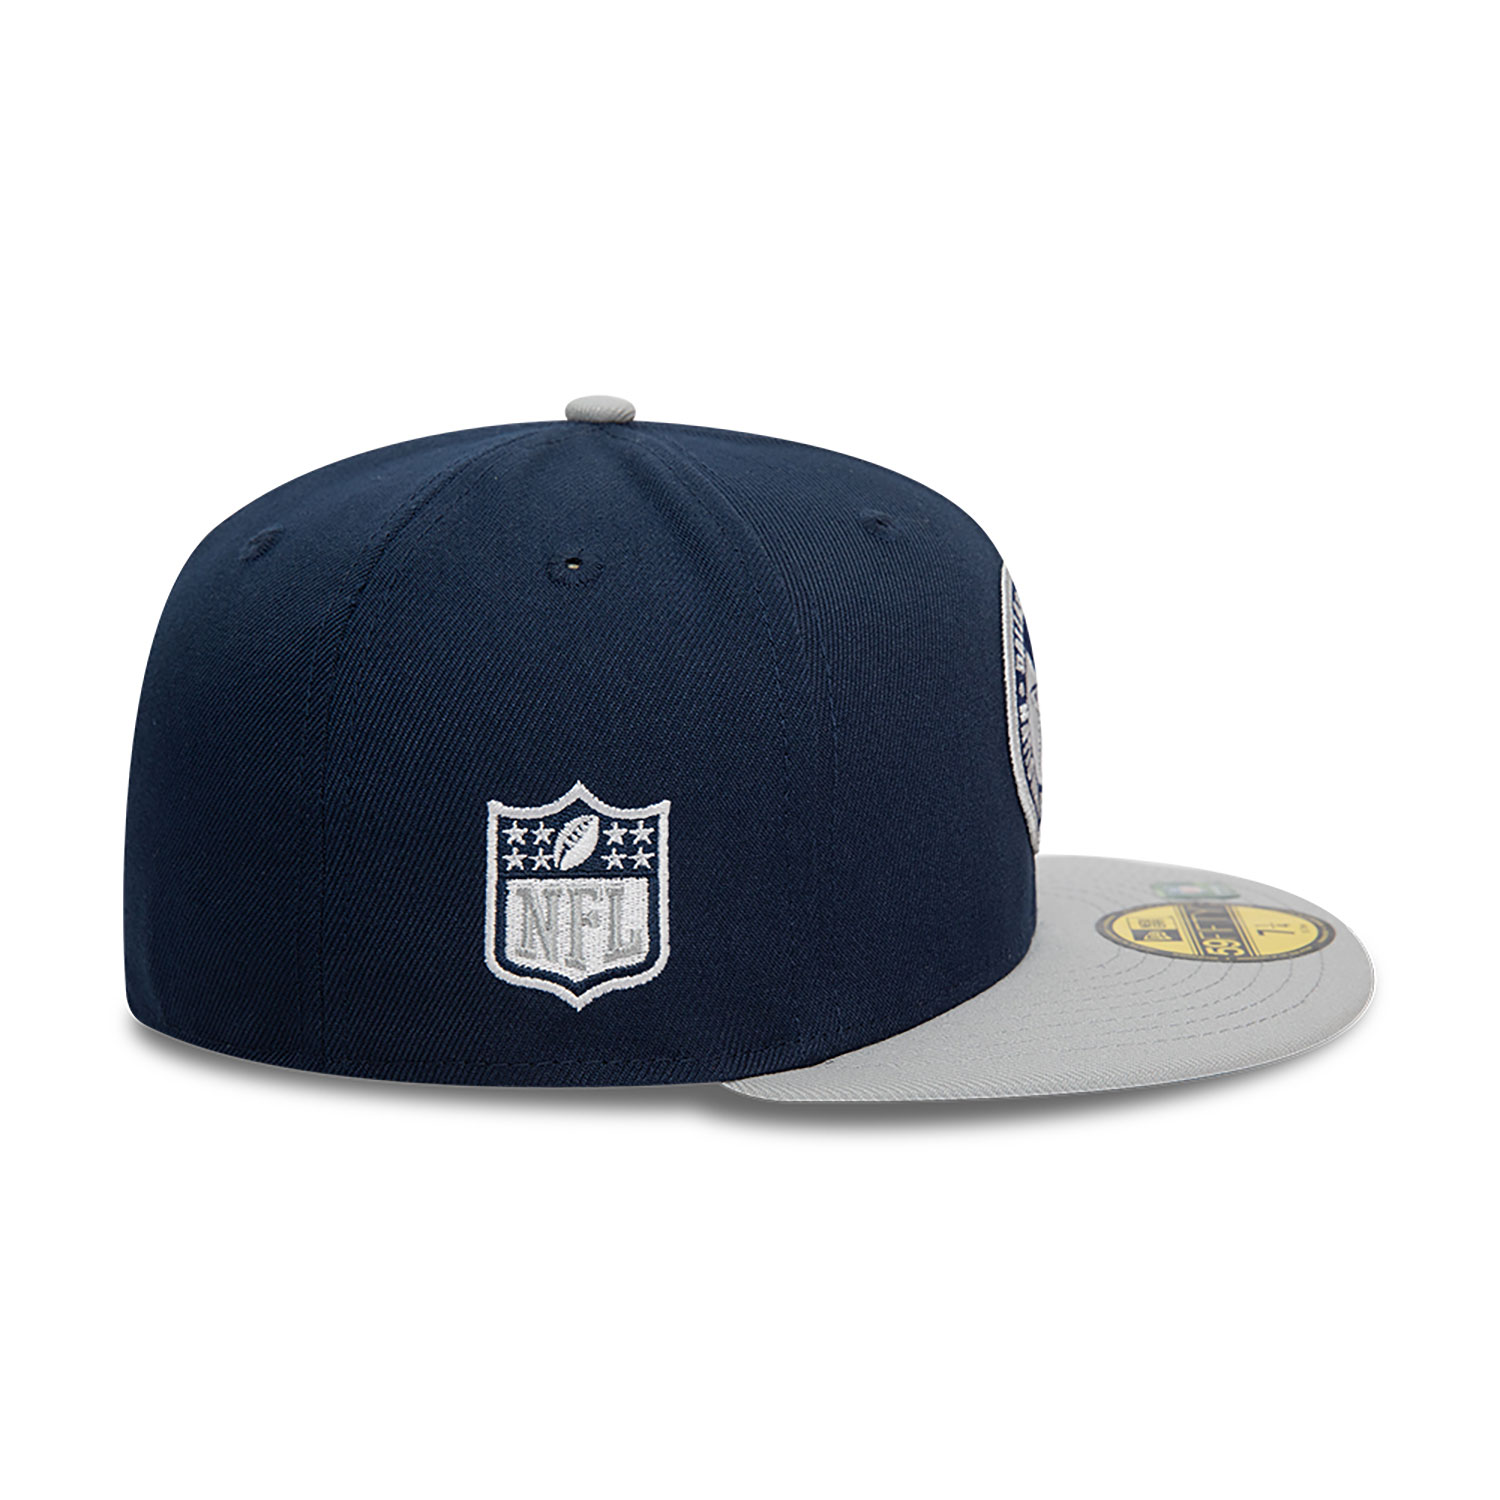 Dallas cowboys new era NFL Sideline Flexfit Hat